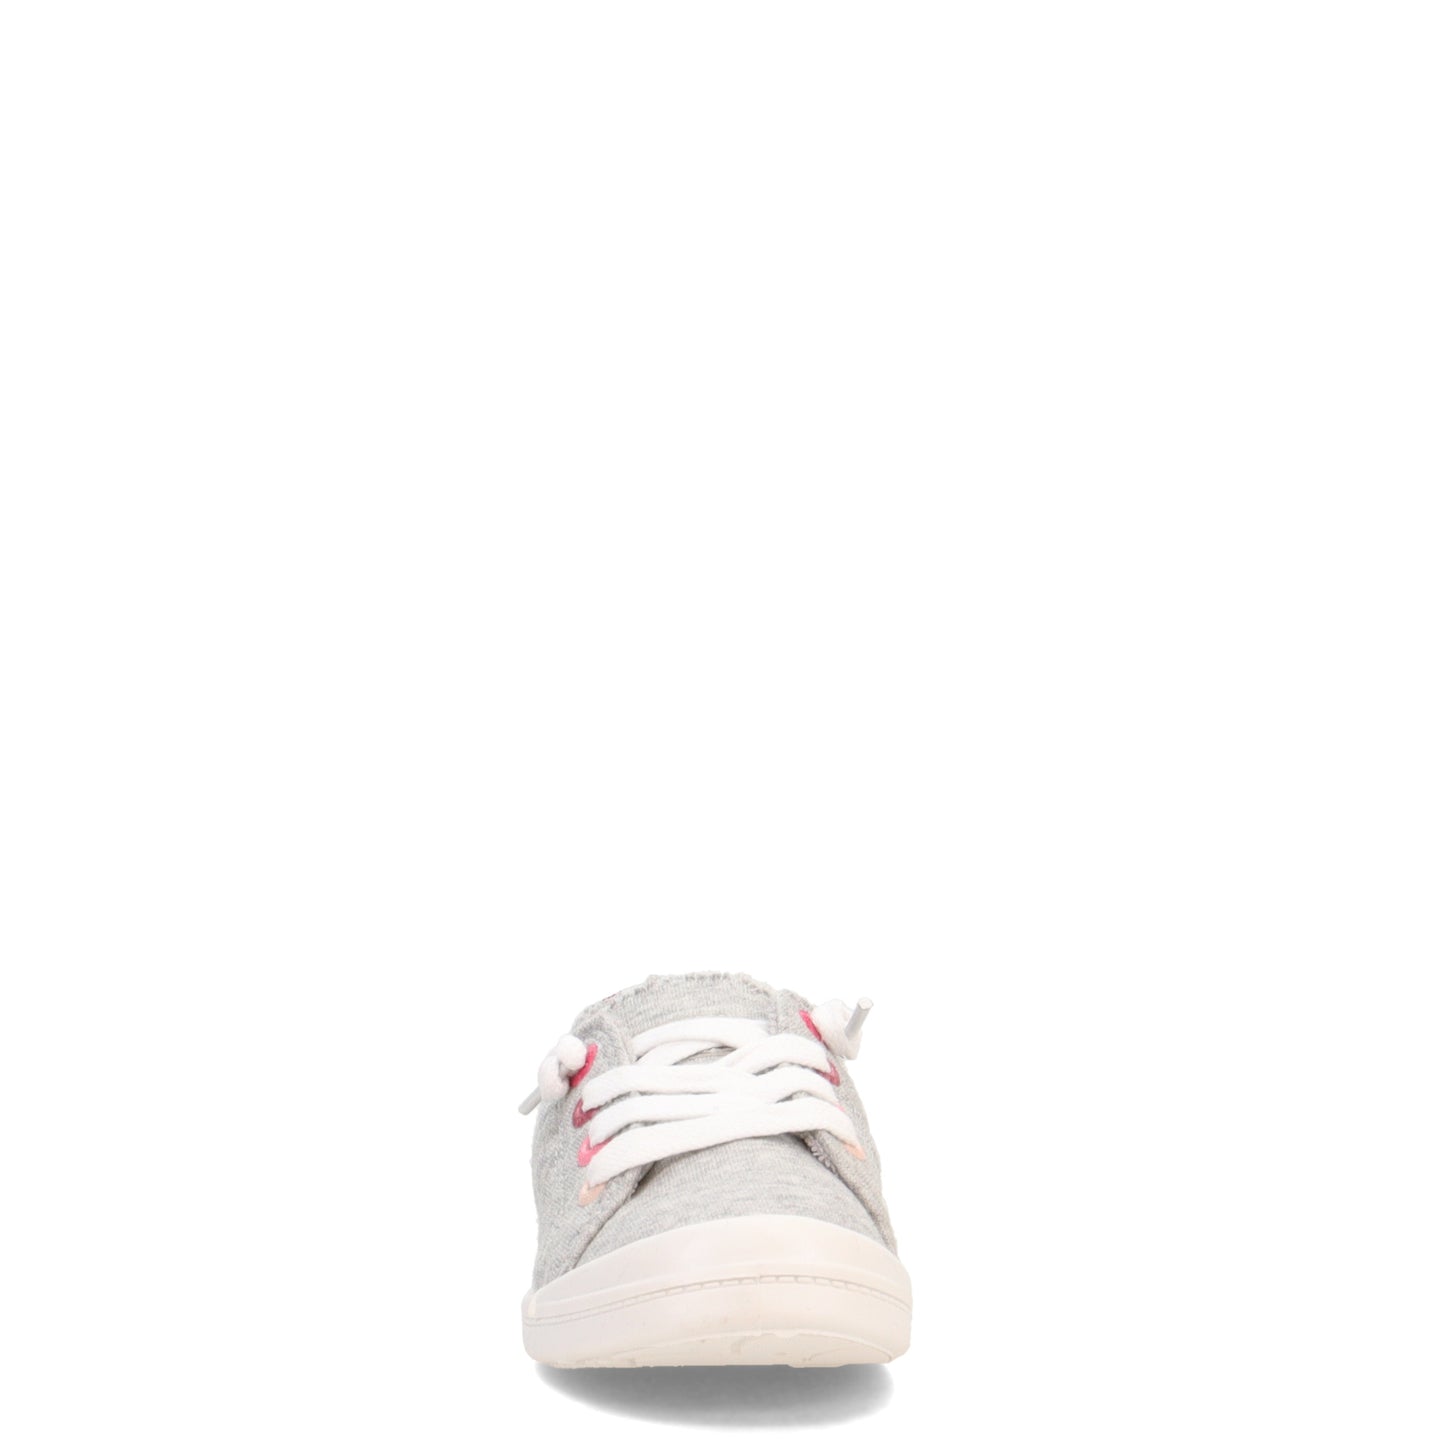 Peltz Shoes  Girl's Roxy Bayshore III Sneaker - Little Kid & Big Kid GREY HEATHER ARGS600091-GRH